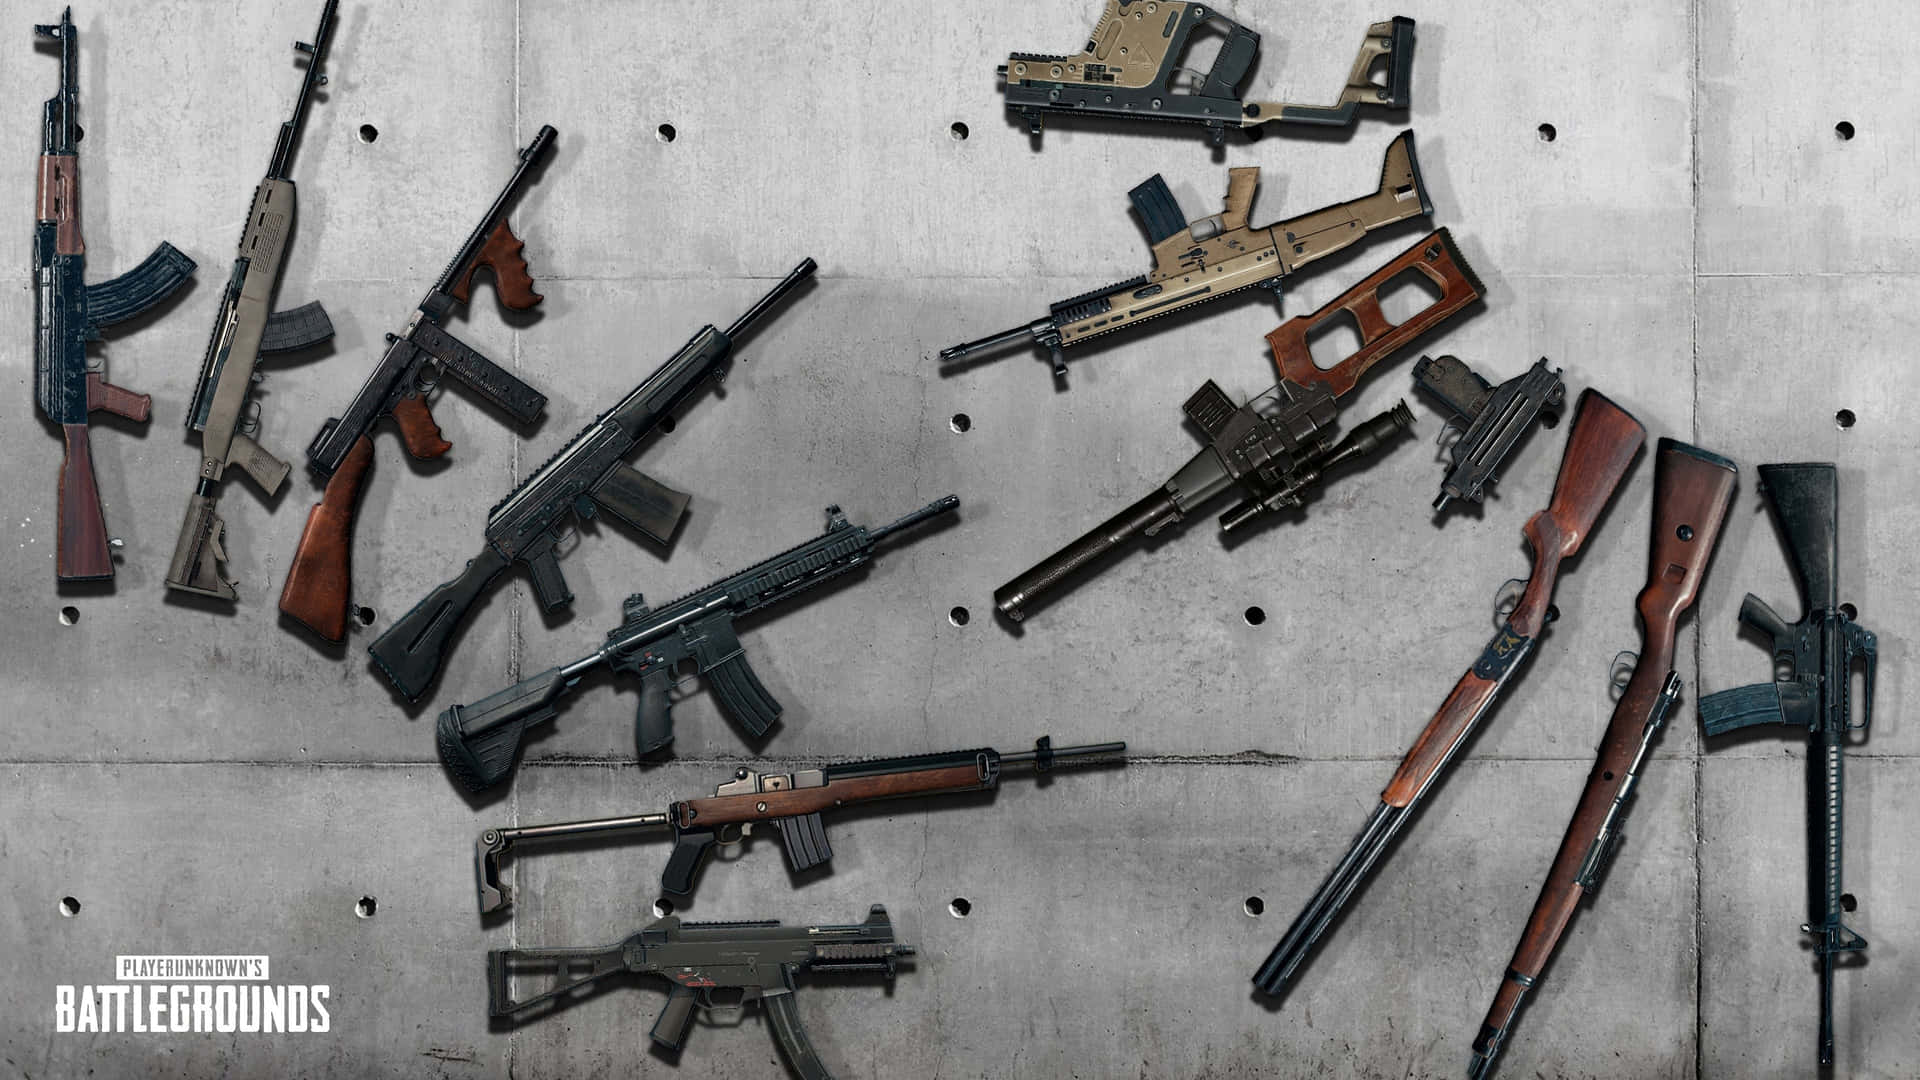 The Ultimate Arsenal of PUBG Guns Wallpaper